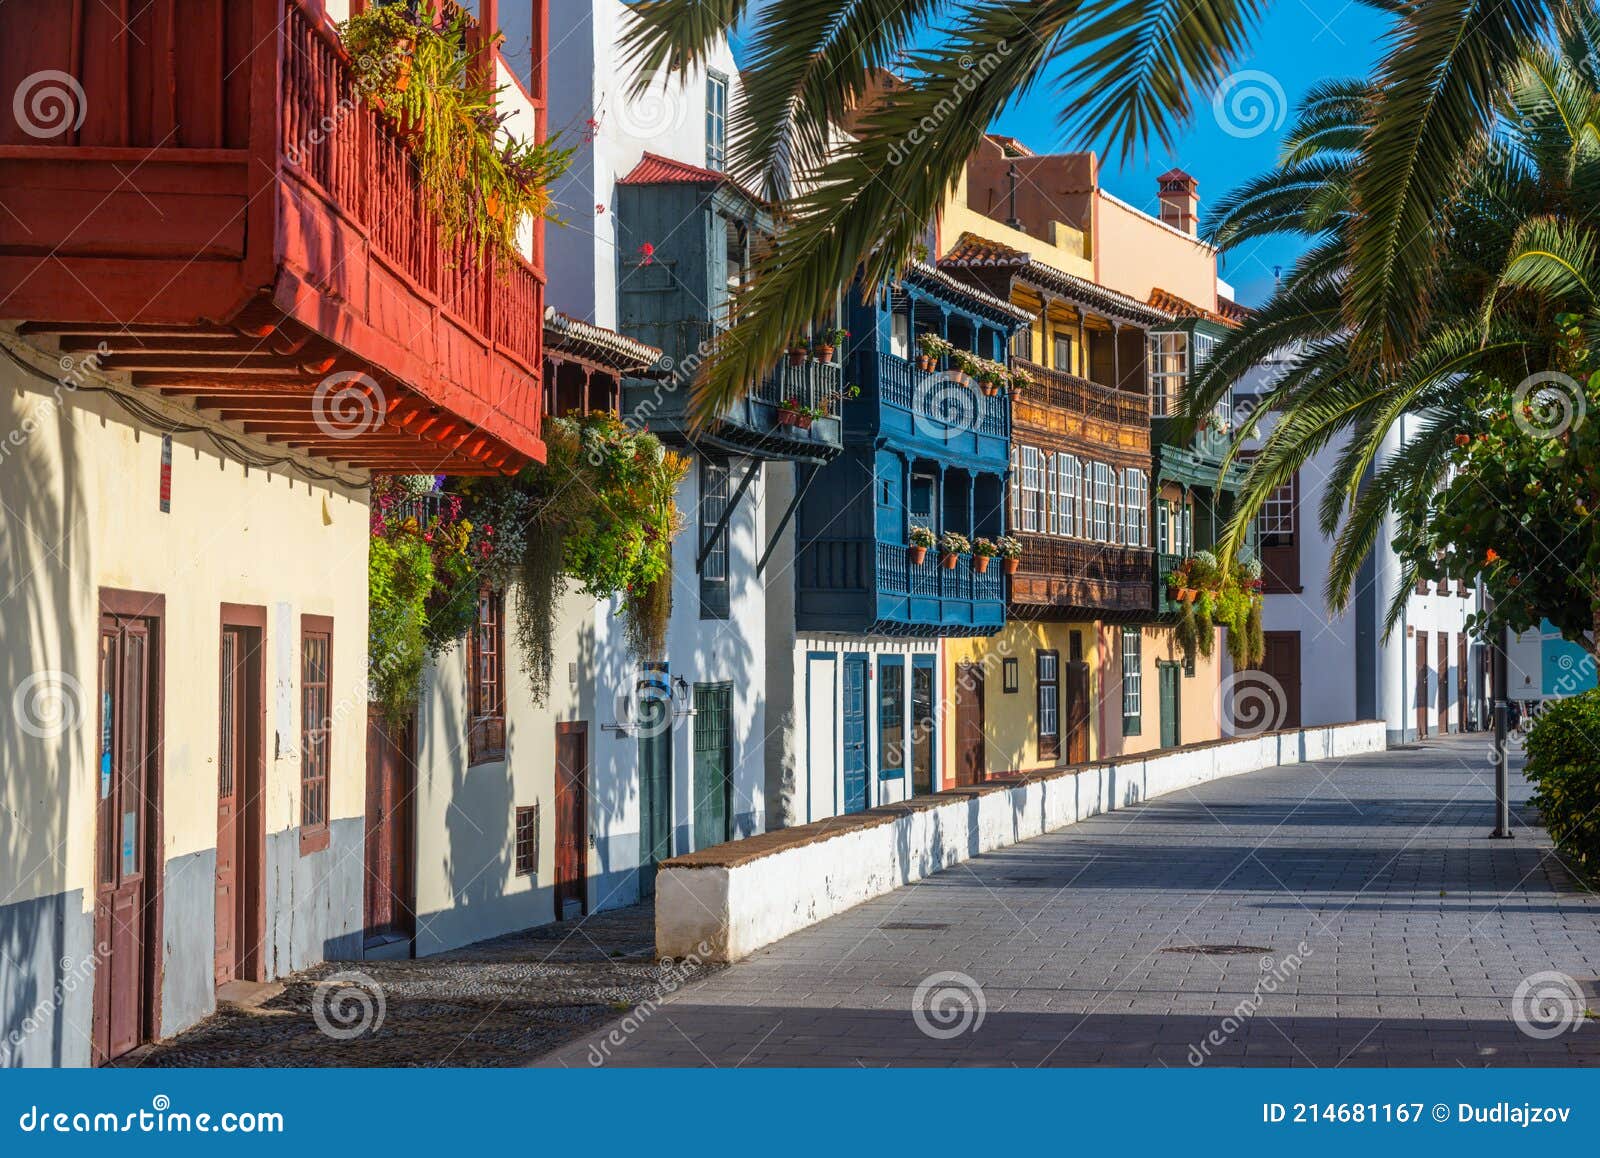 traditional houses with wooden balconies at santa cruz de la palma, canary islands, spain